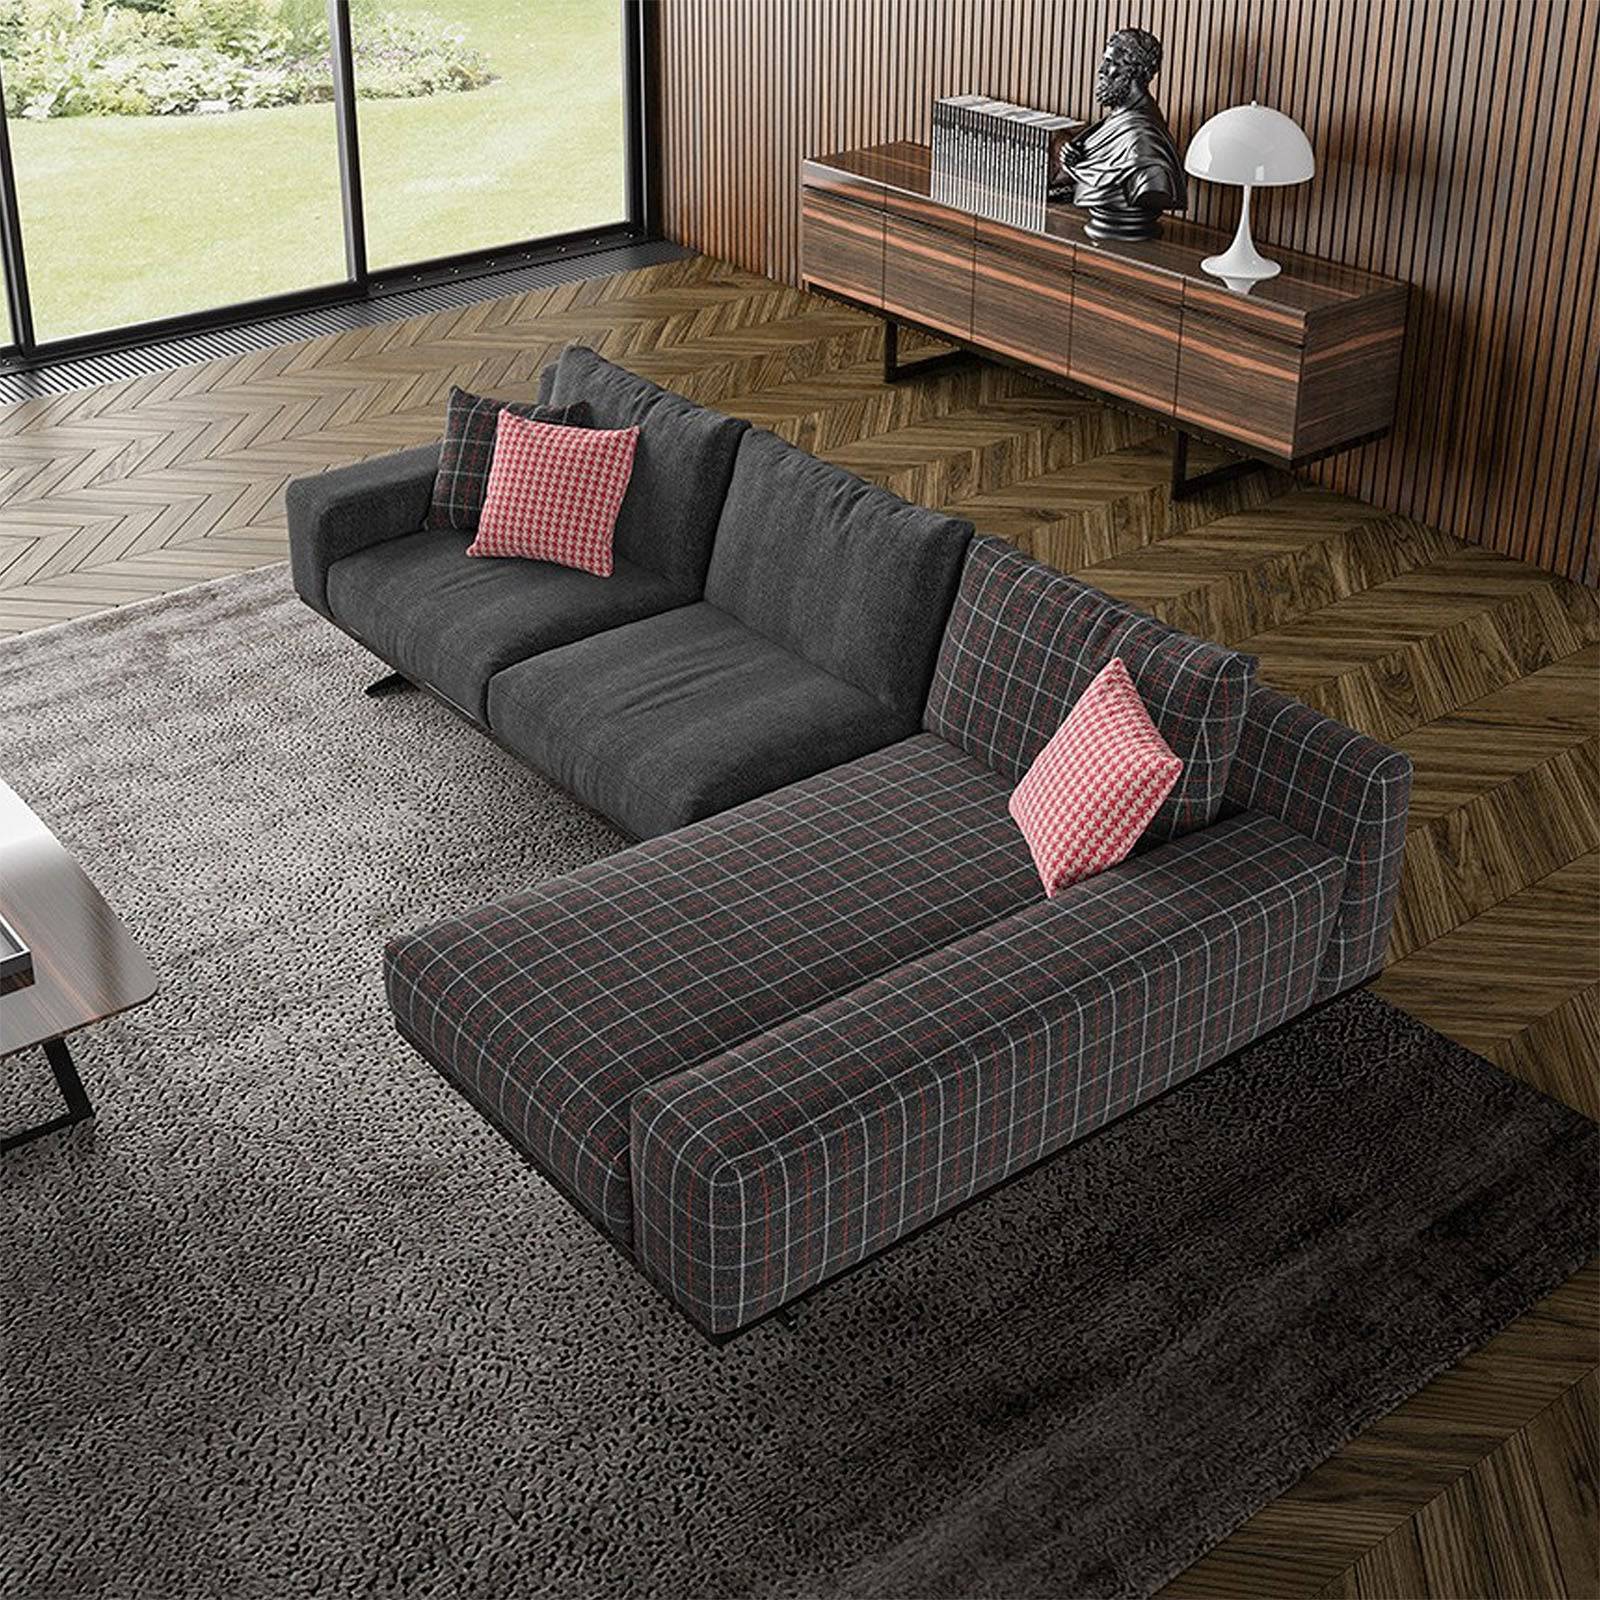 Elegant Corner Sofa Set Elegant002co Ebarza Modern Furniture In Abu Dhabi Dubai